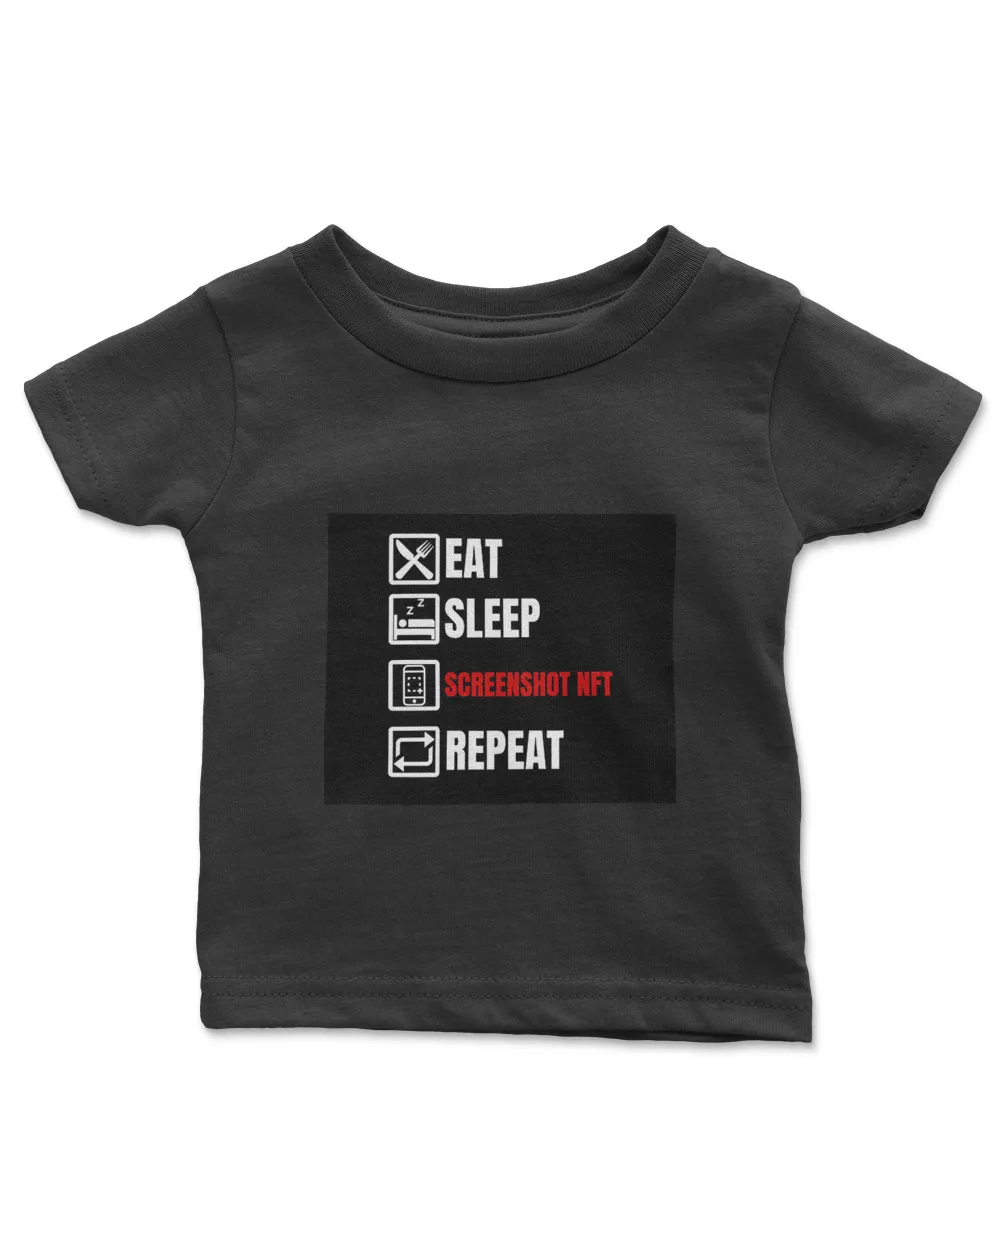 Eat sleep screenshot nft repeat Mouse Pad